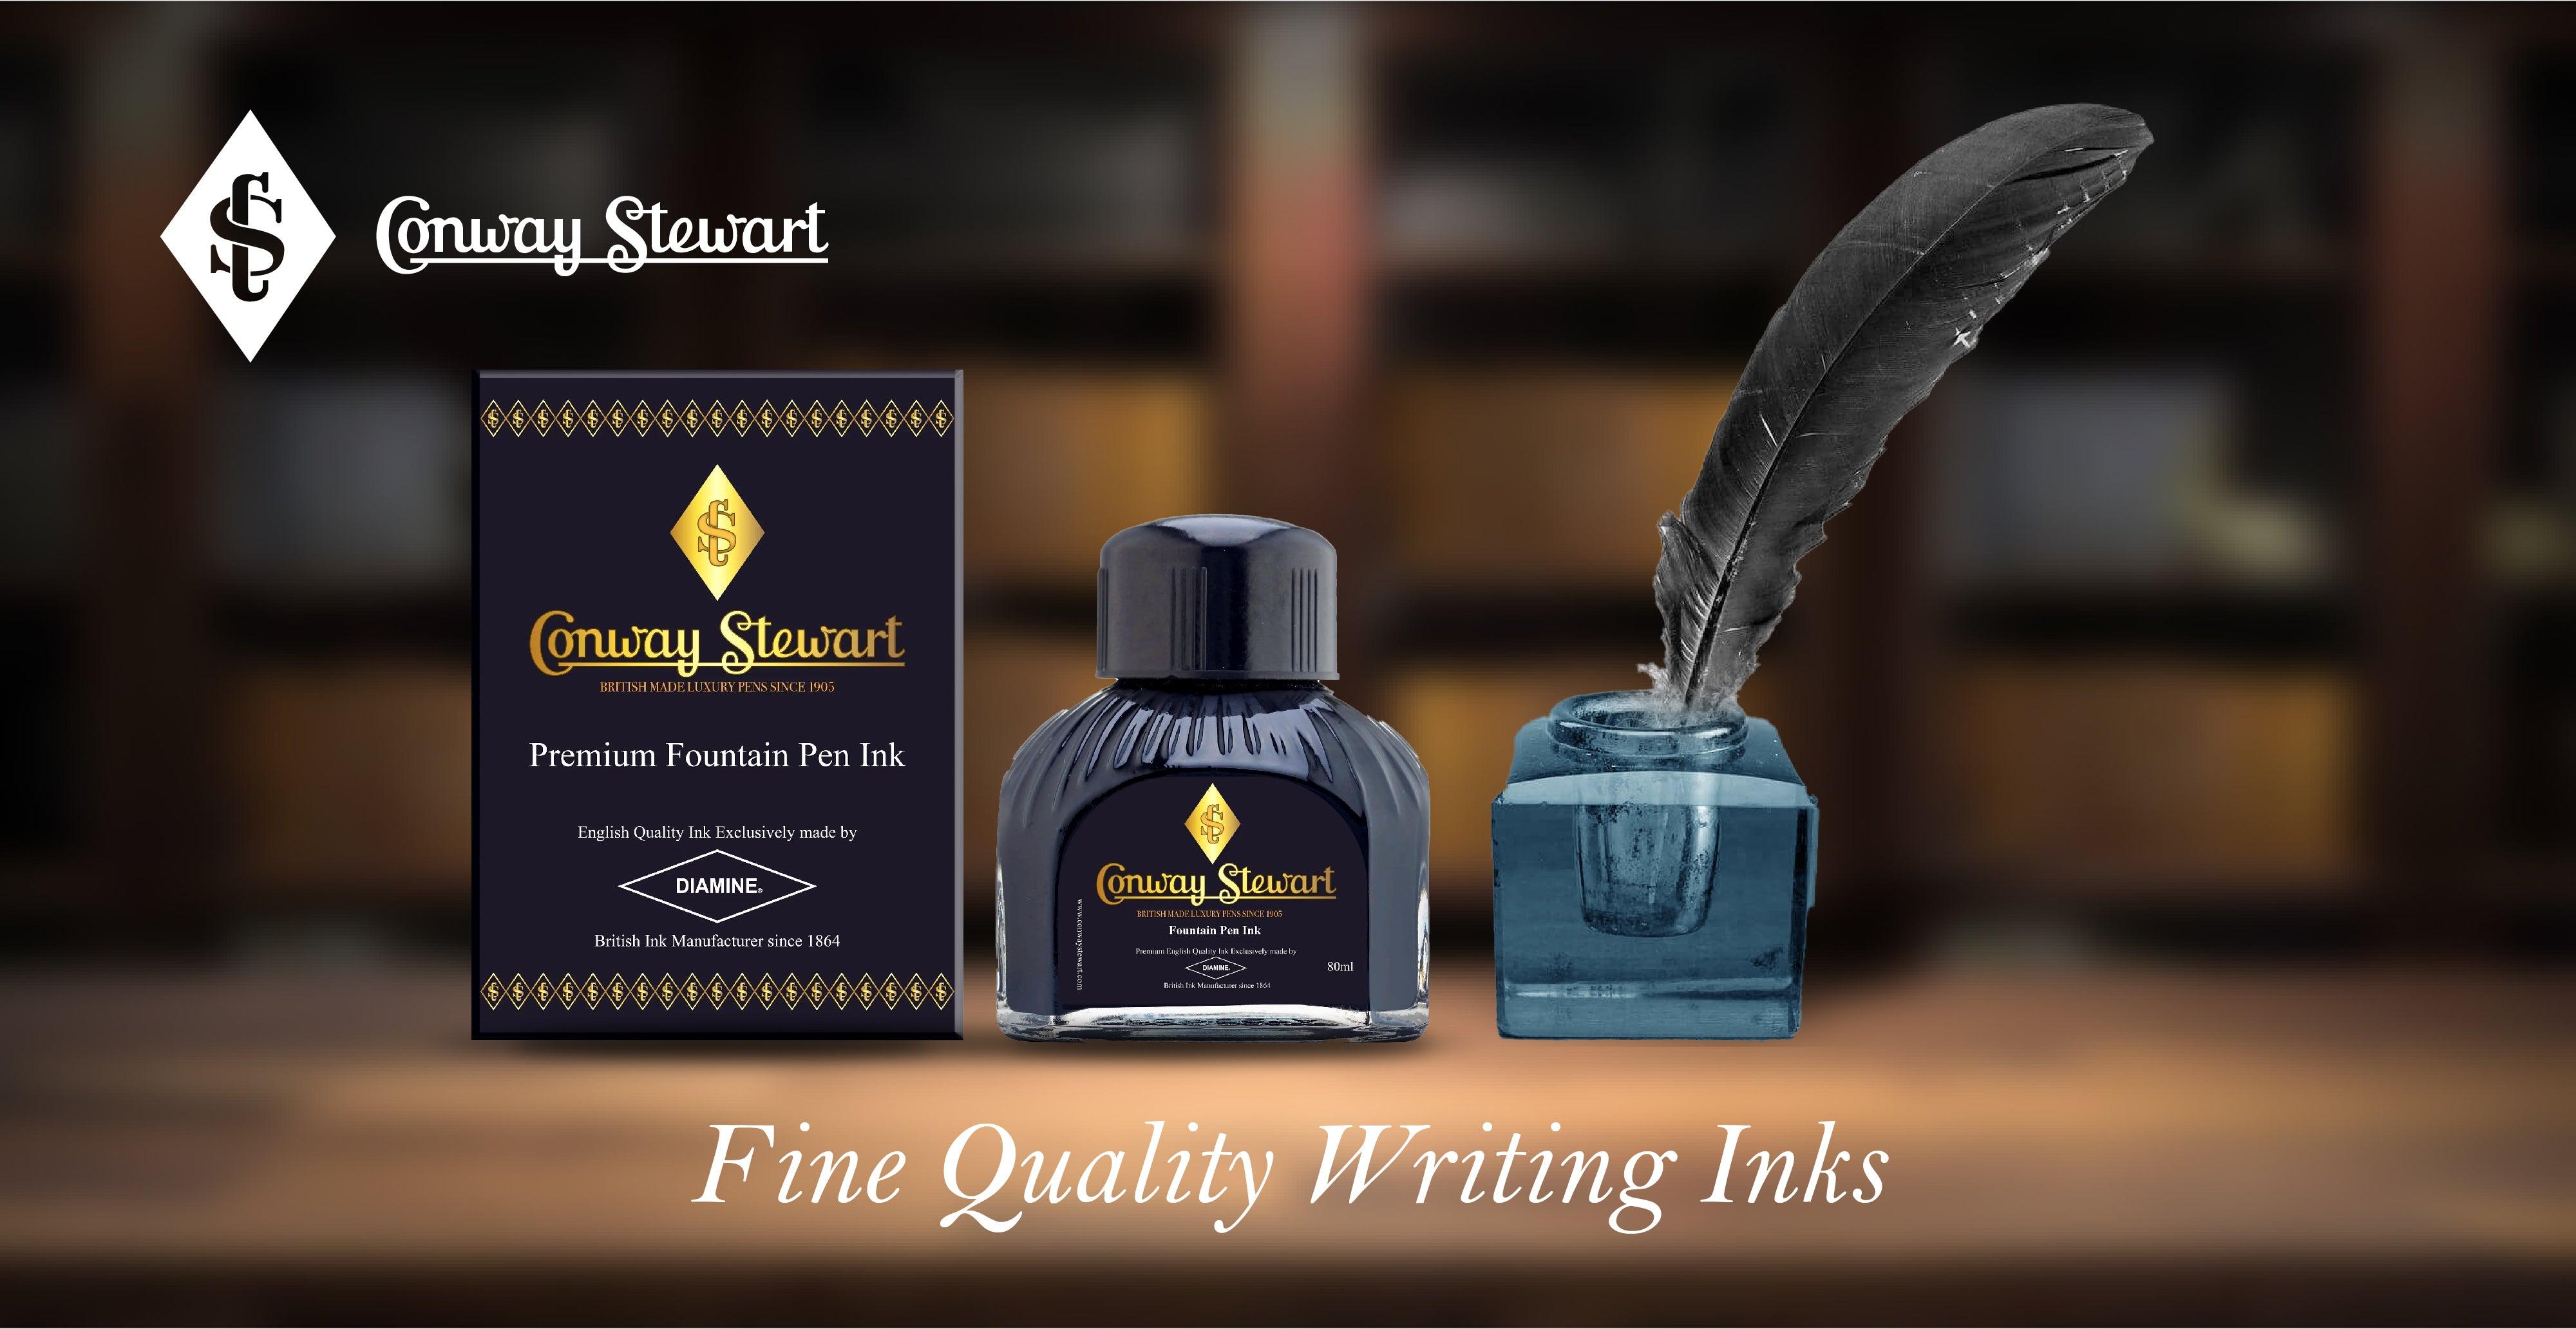 Conway Stewart Fine Quality Writing Inks, 2007 - Conway Stewart